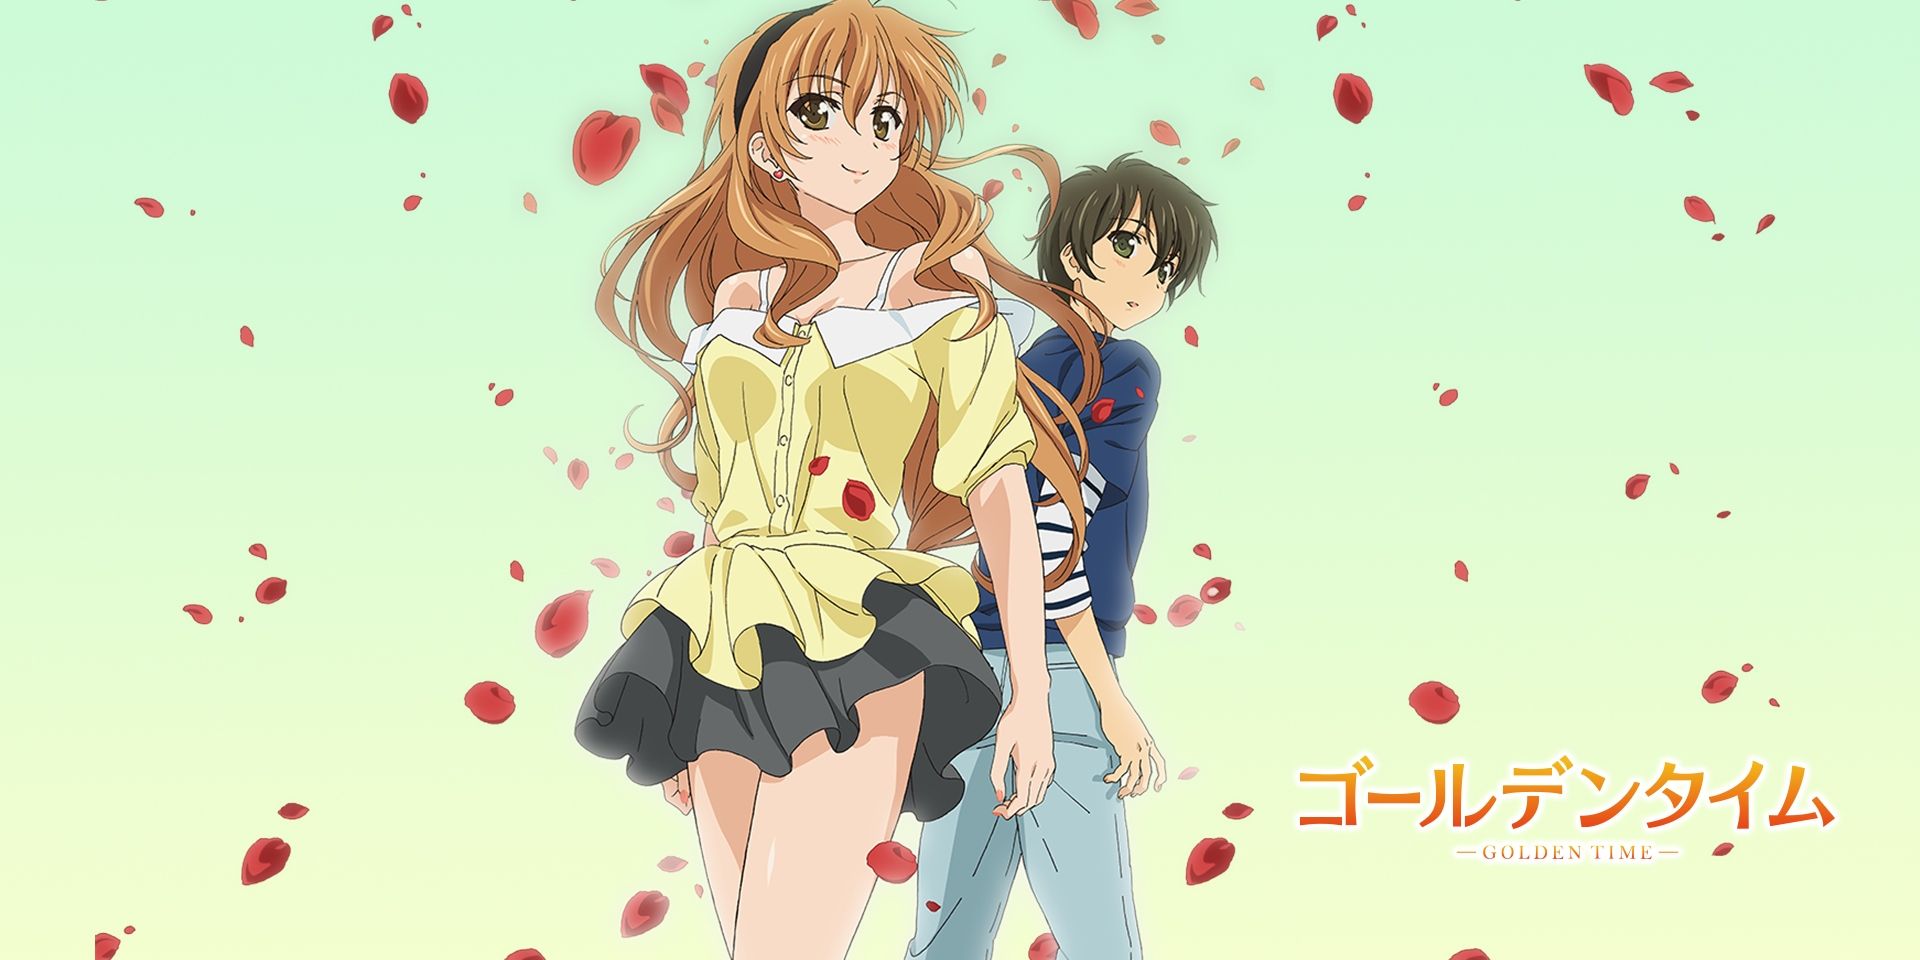 A Golden Time promo image shows leaves falling around Banri Tada and Koko Kaga